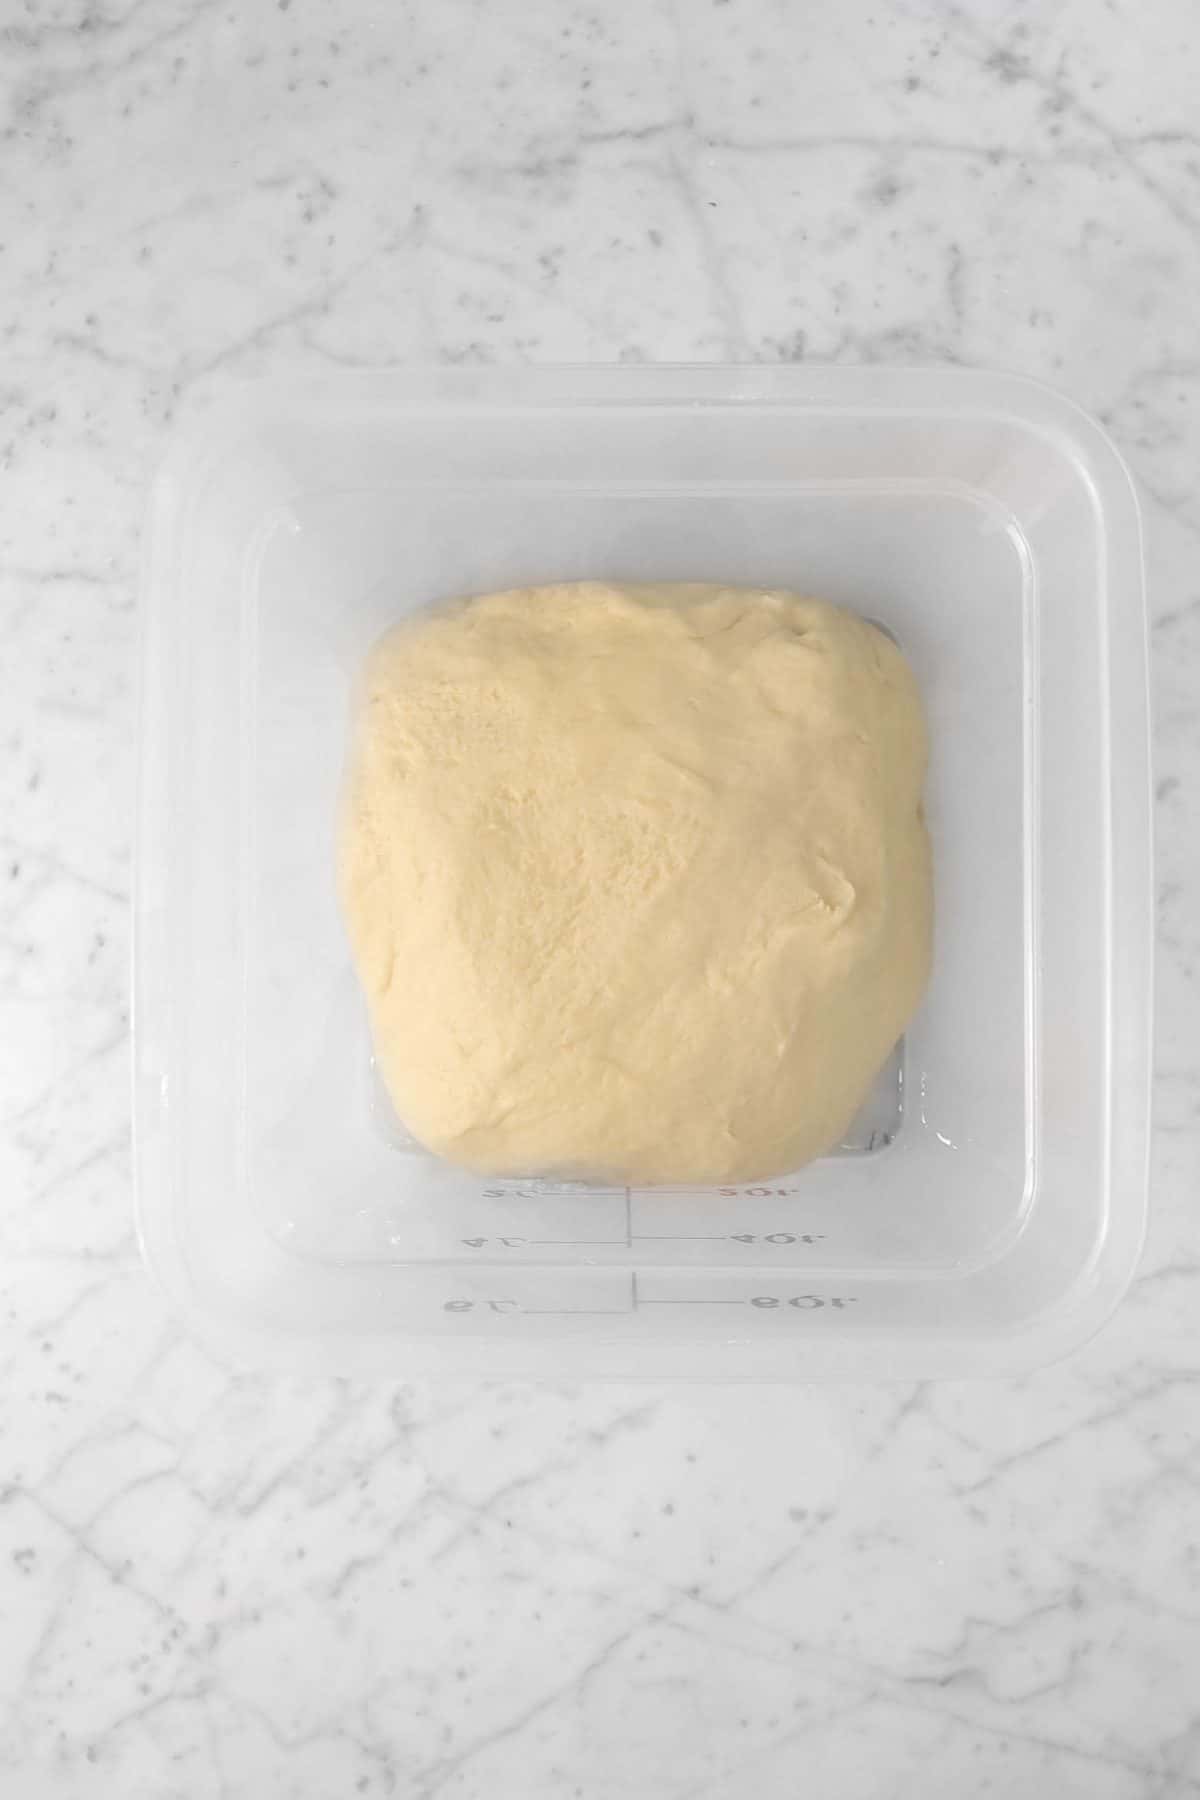 cinnamon roll dough in a dough rising bucket